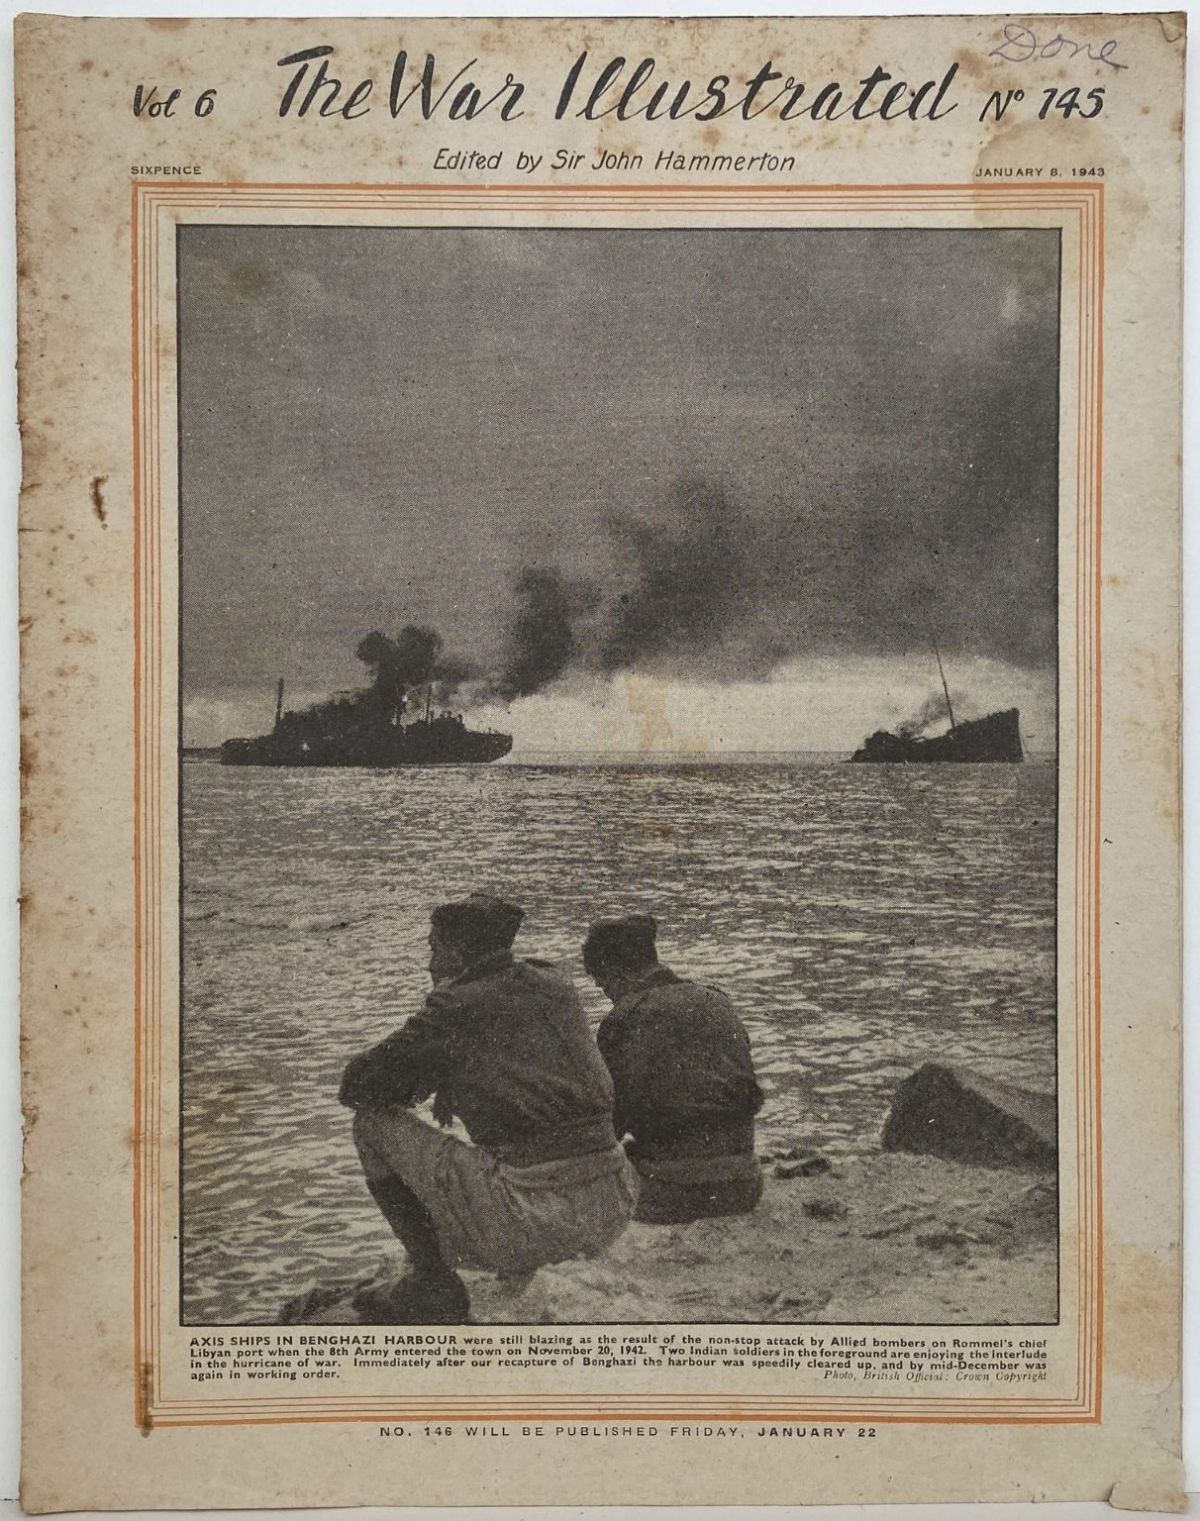 THE WAR ILLUSTRATED - Vol 6, No 145, 8th Jan 1943